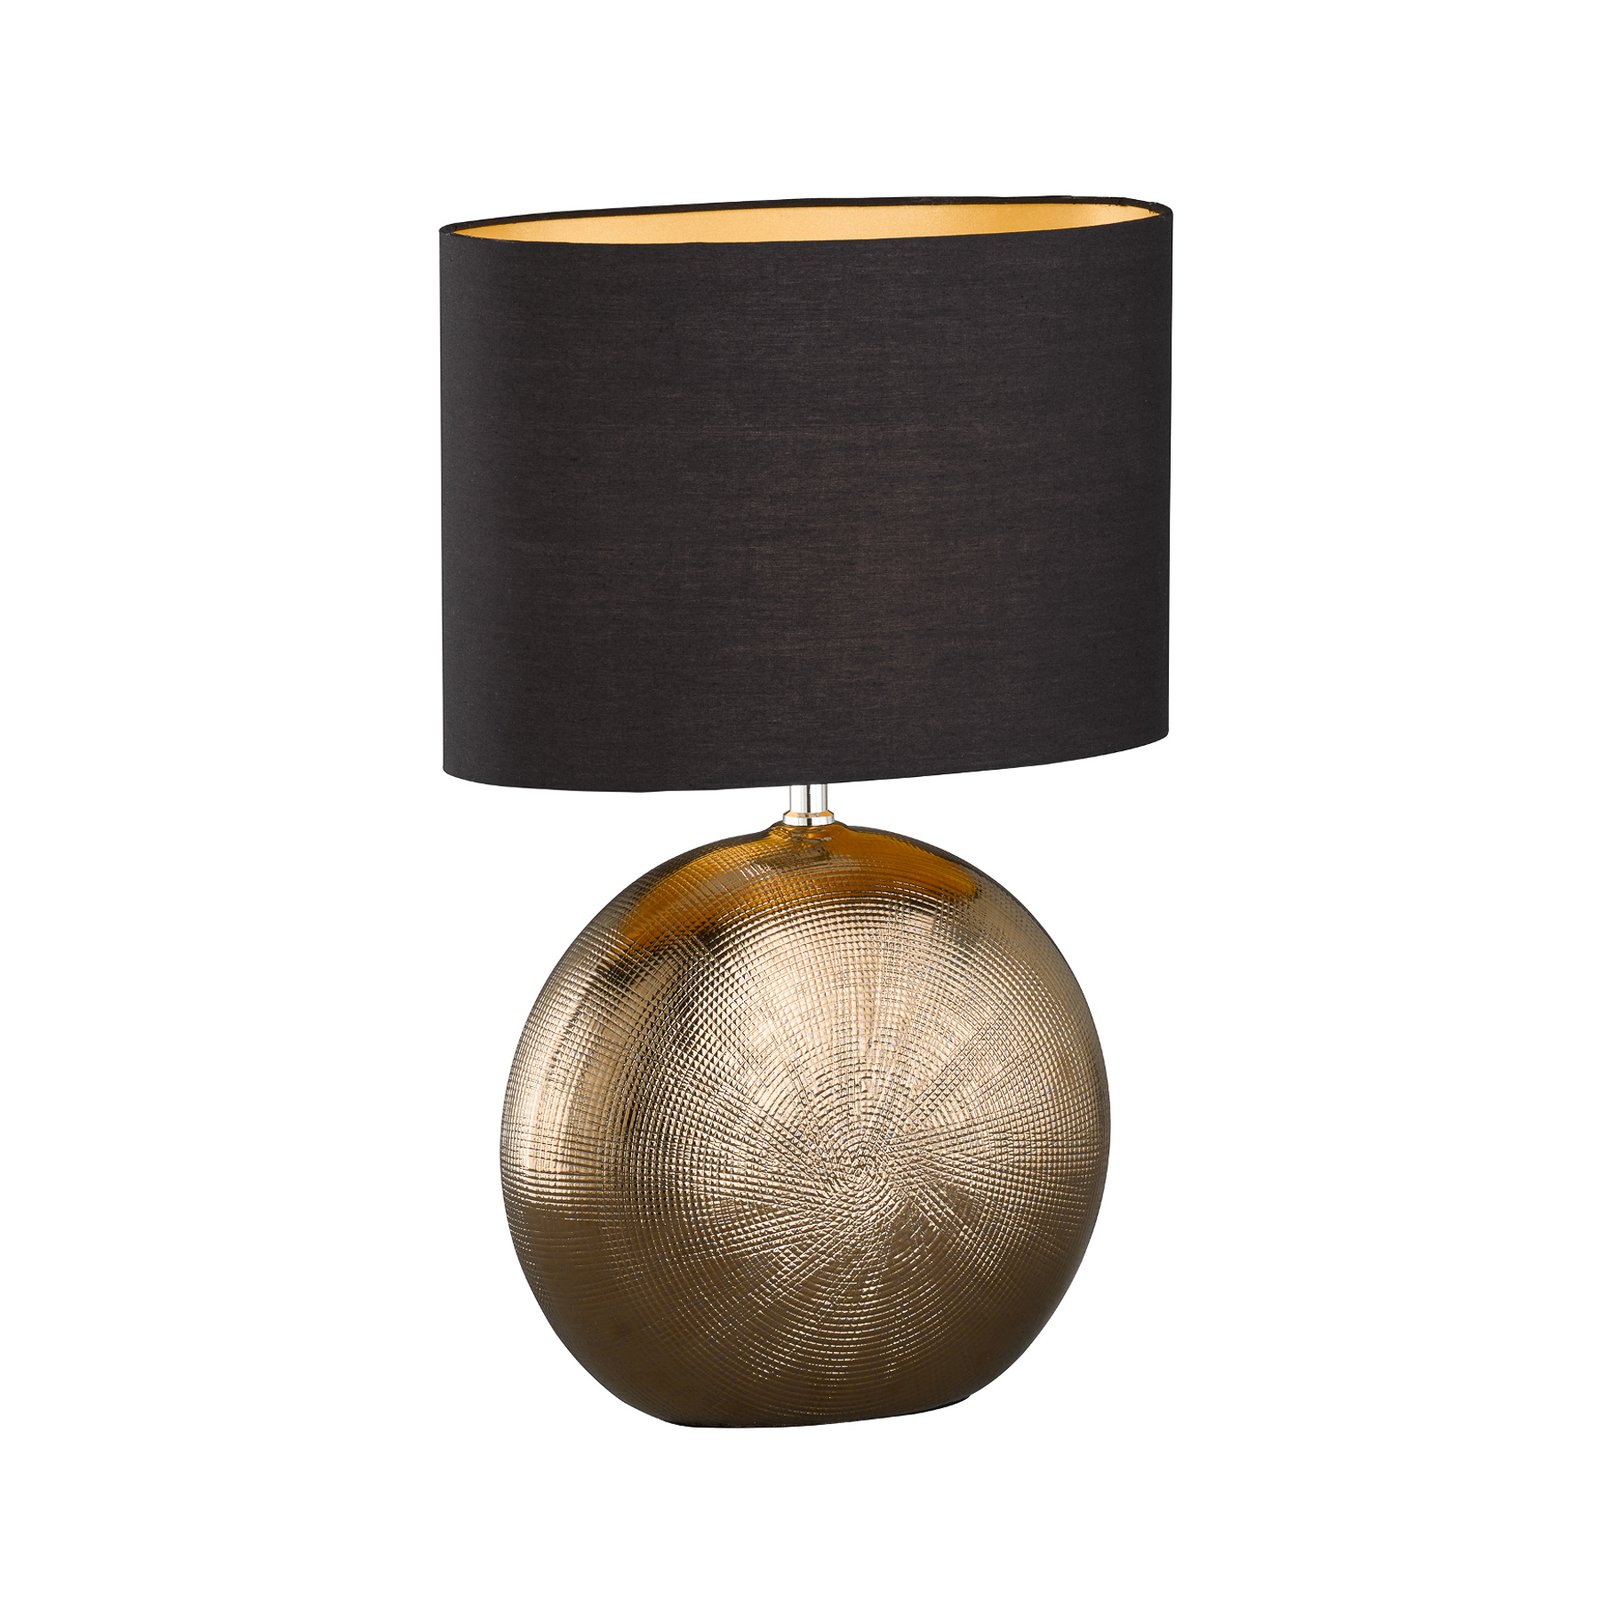 Foro bordslampa, brons/svart, höjd 53 cm